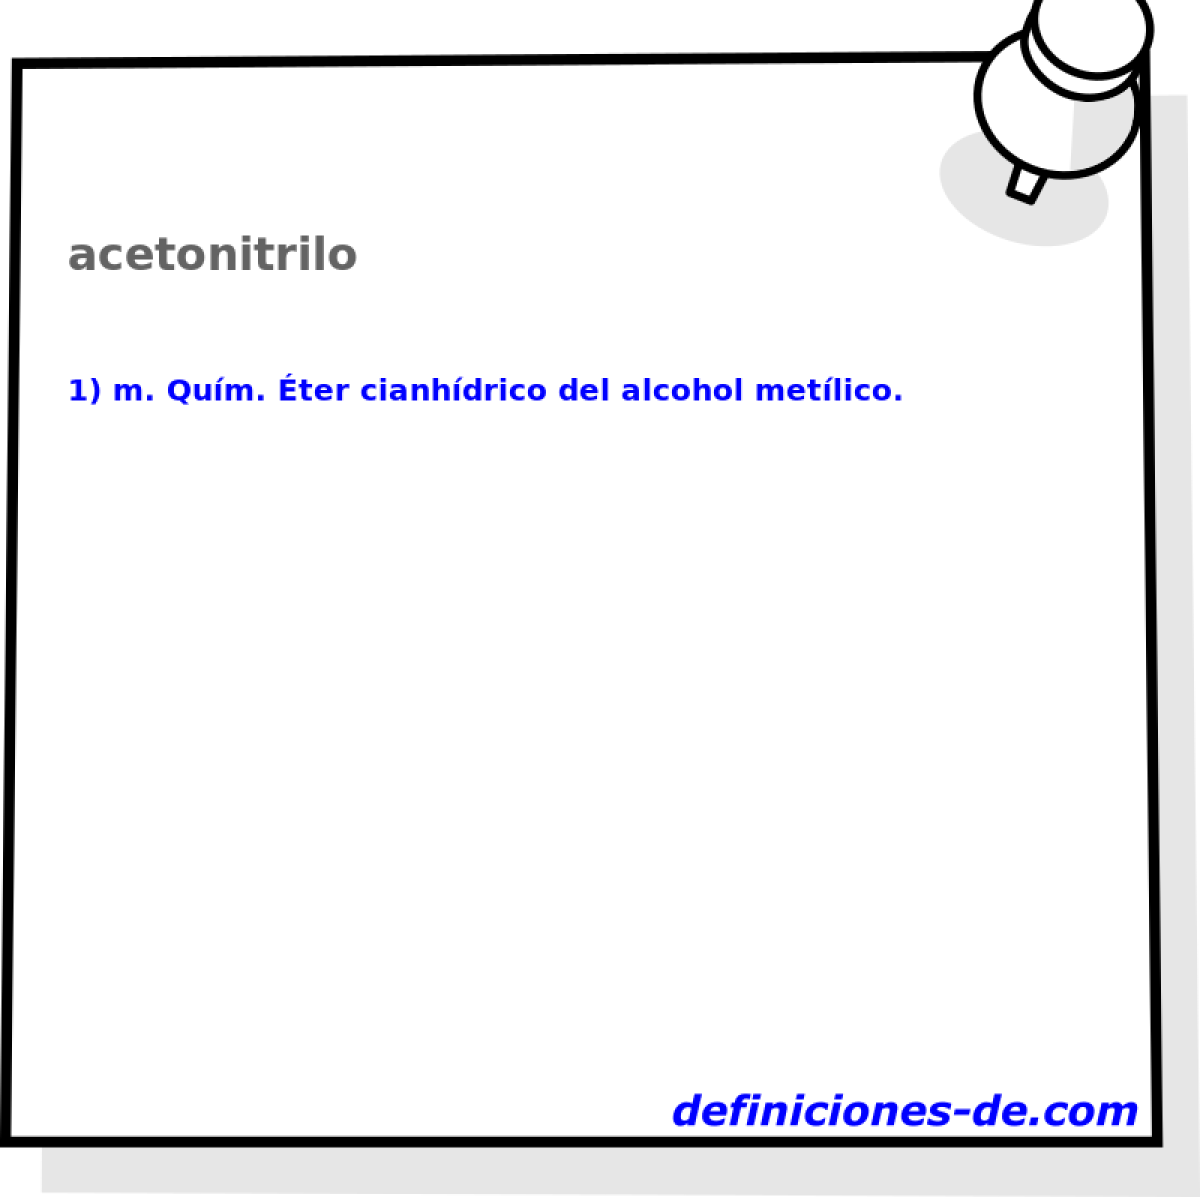 acetonitrilo 